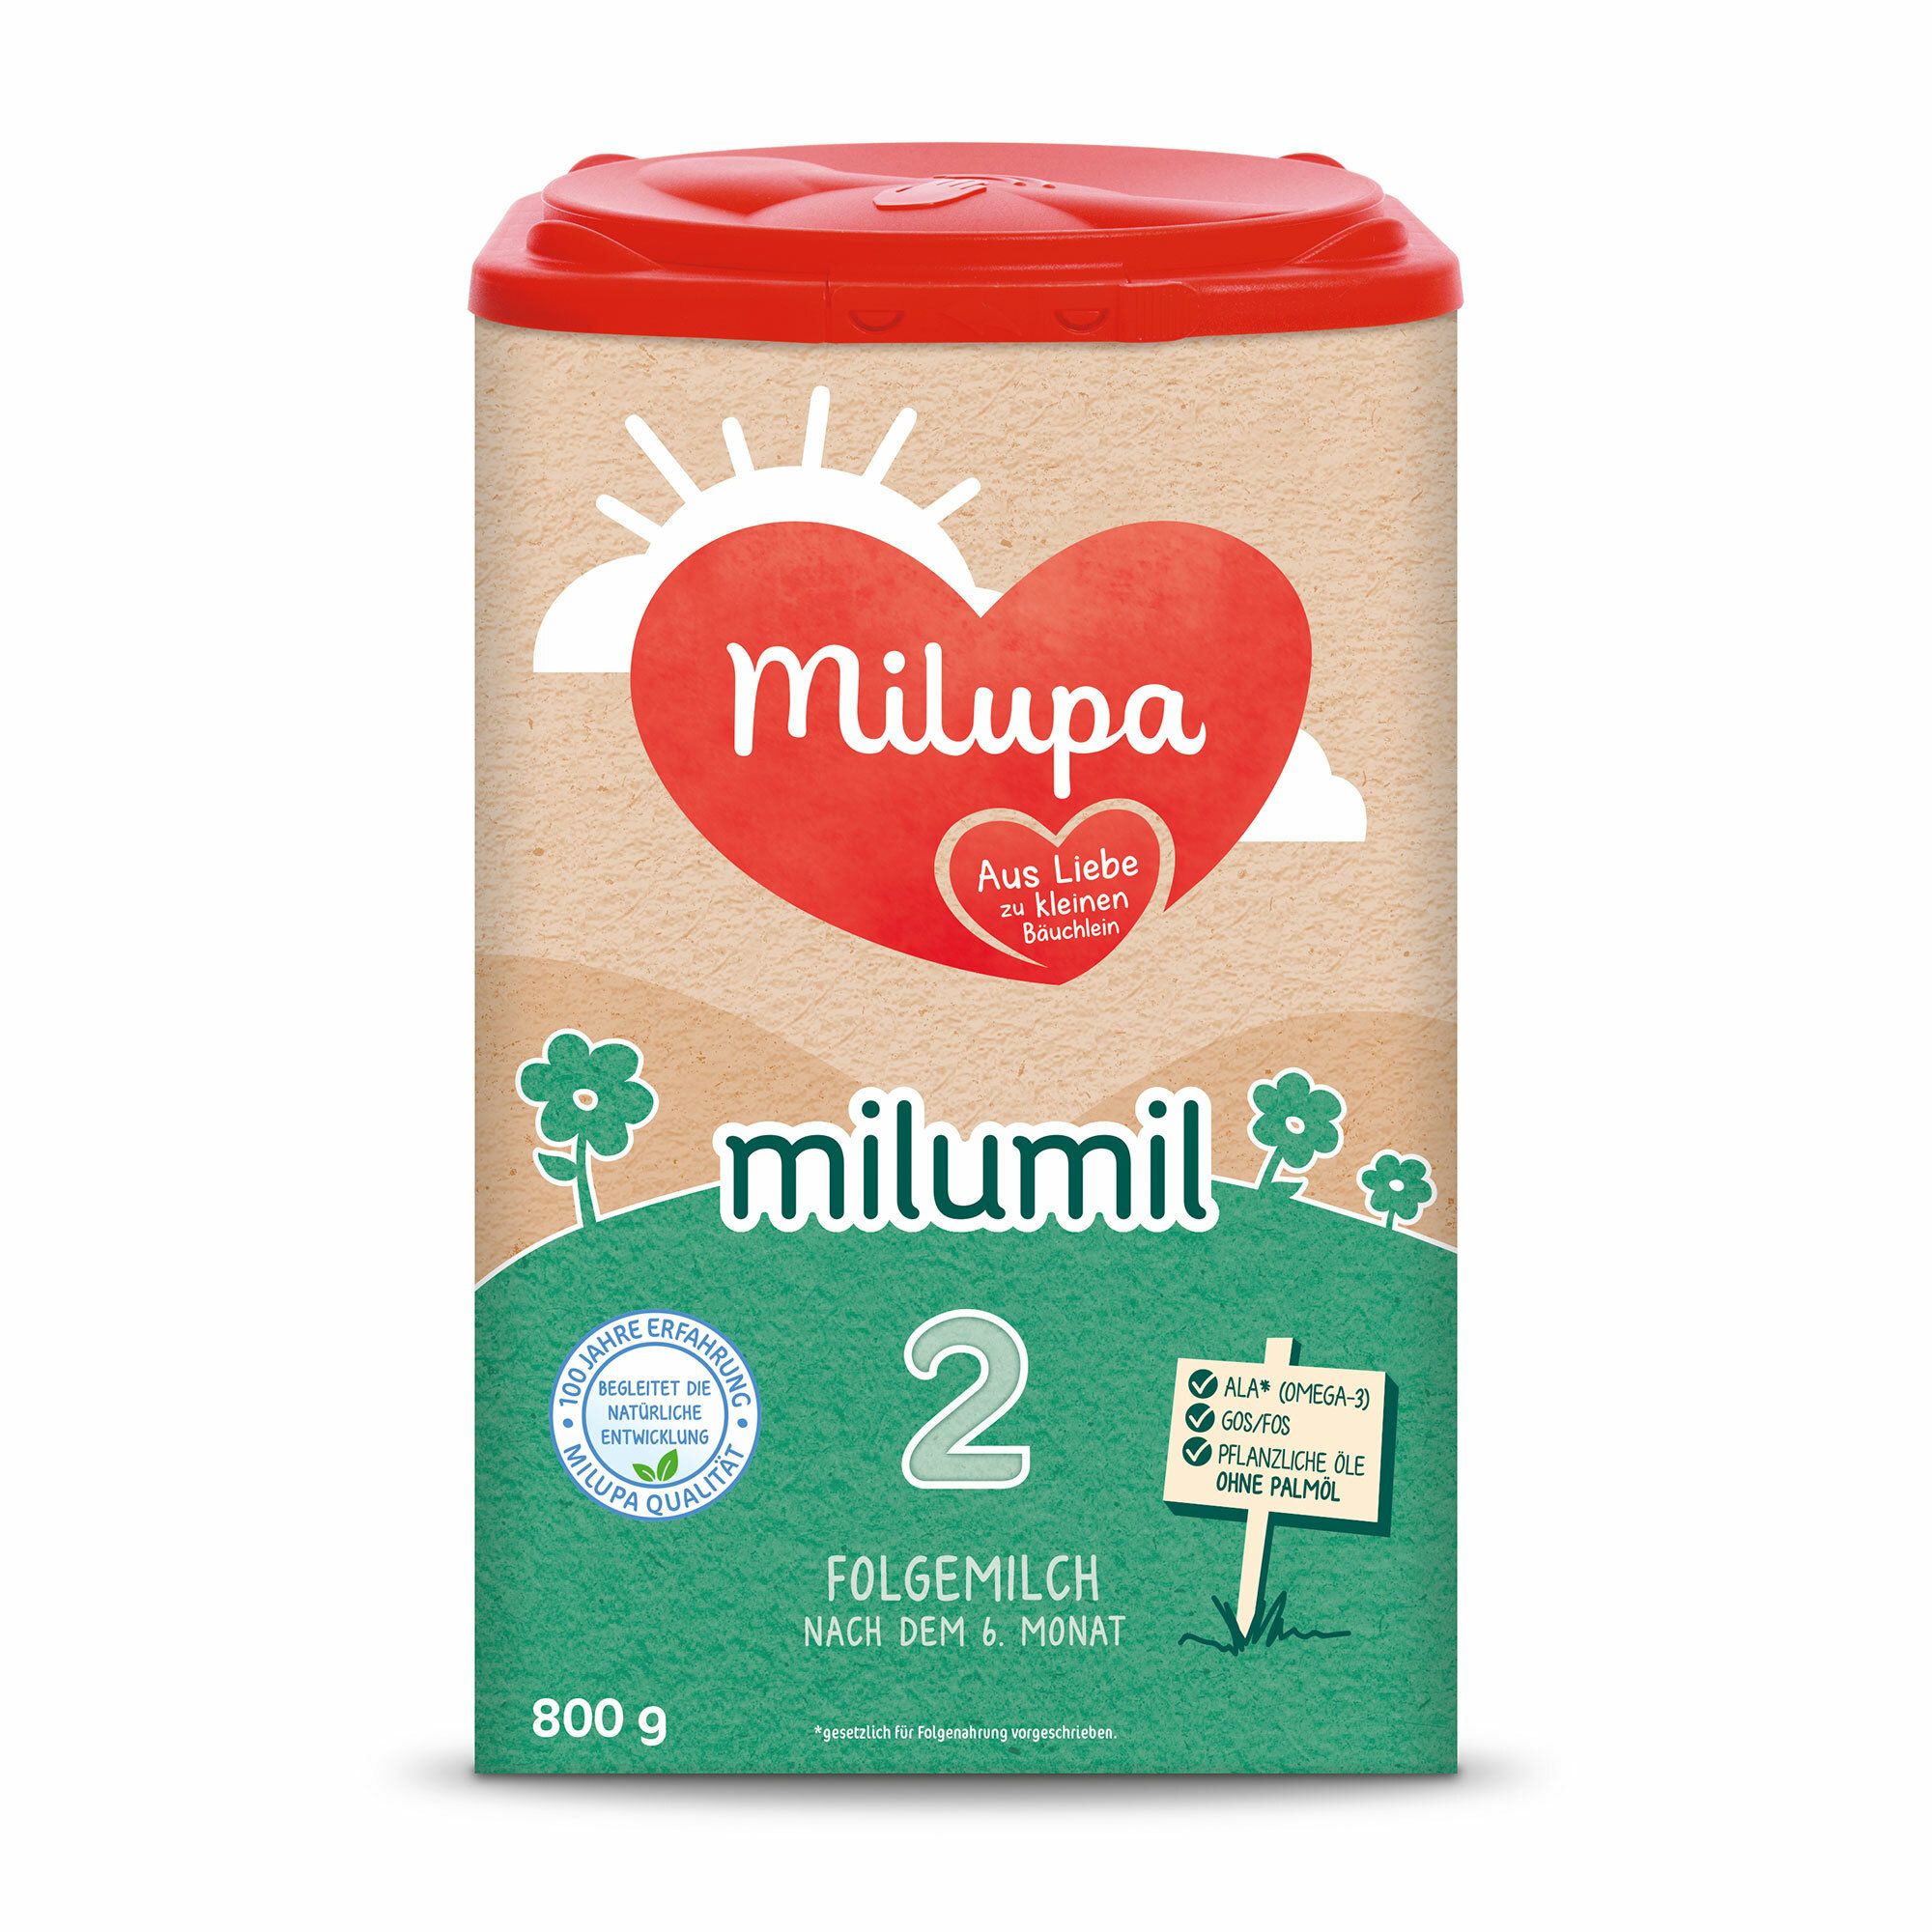 Milupa milumil 2 Folgemilch nach dem 6 Monat